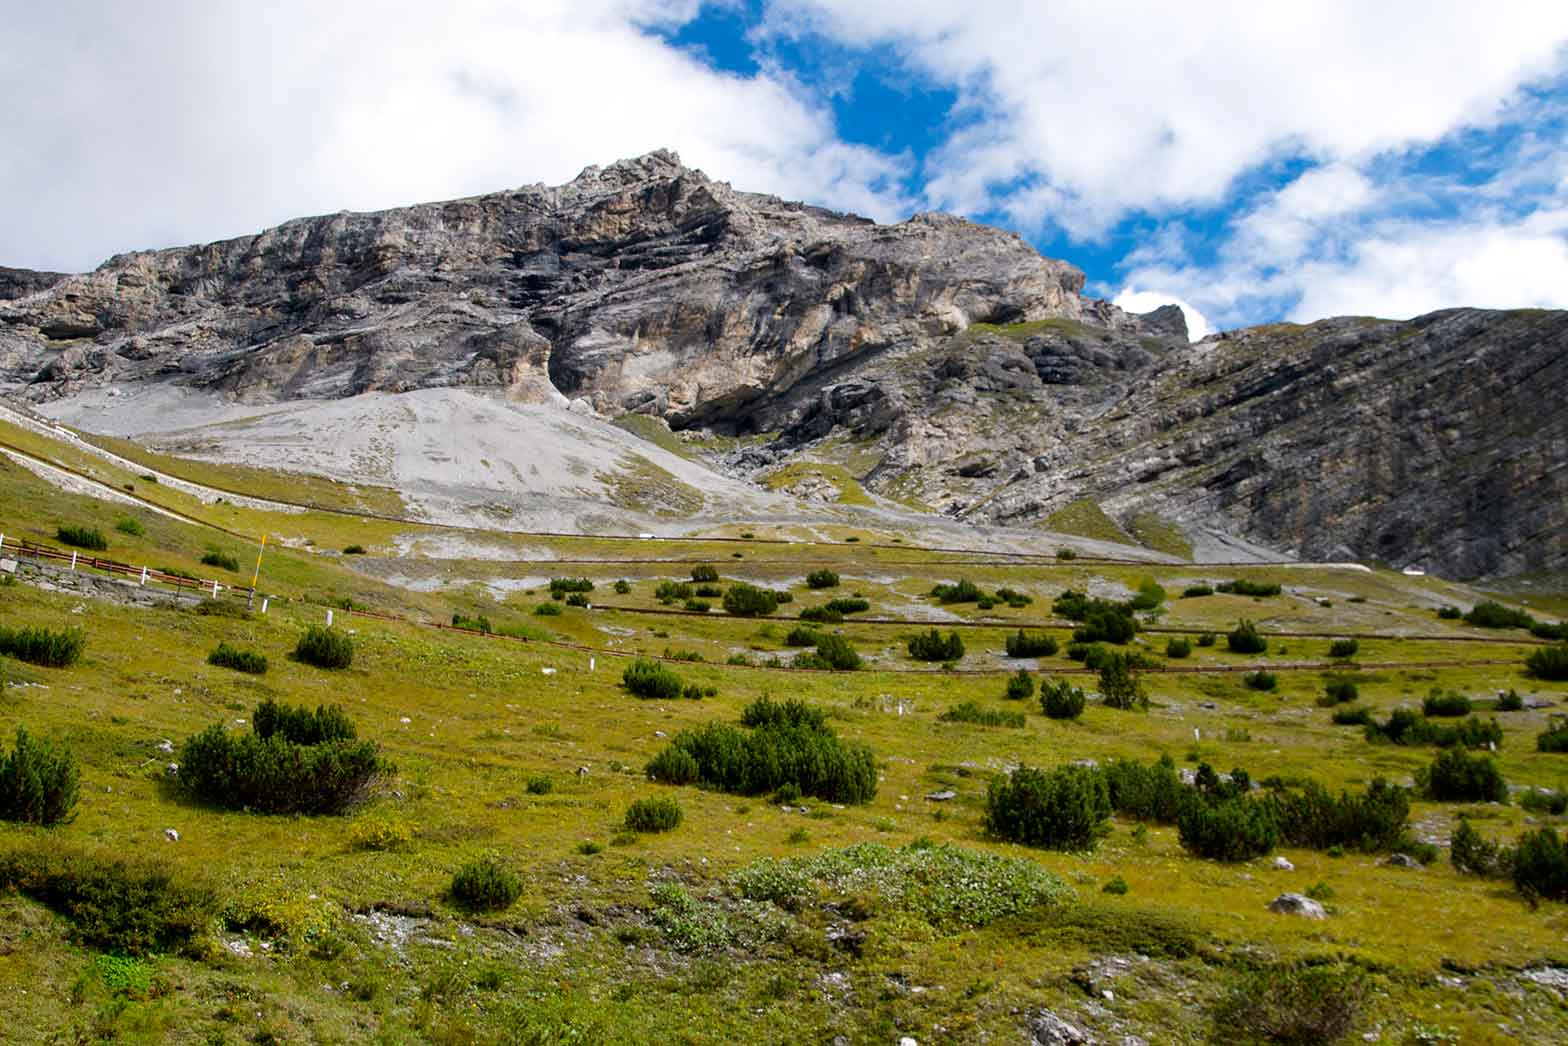 The Dolomites landscape